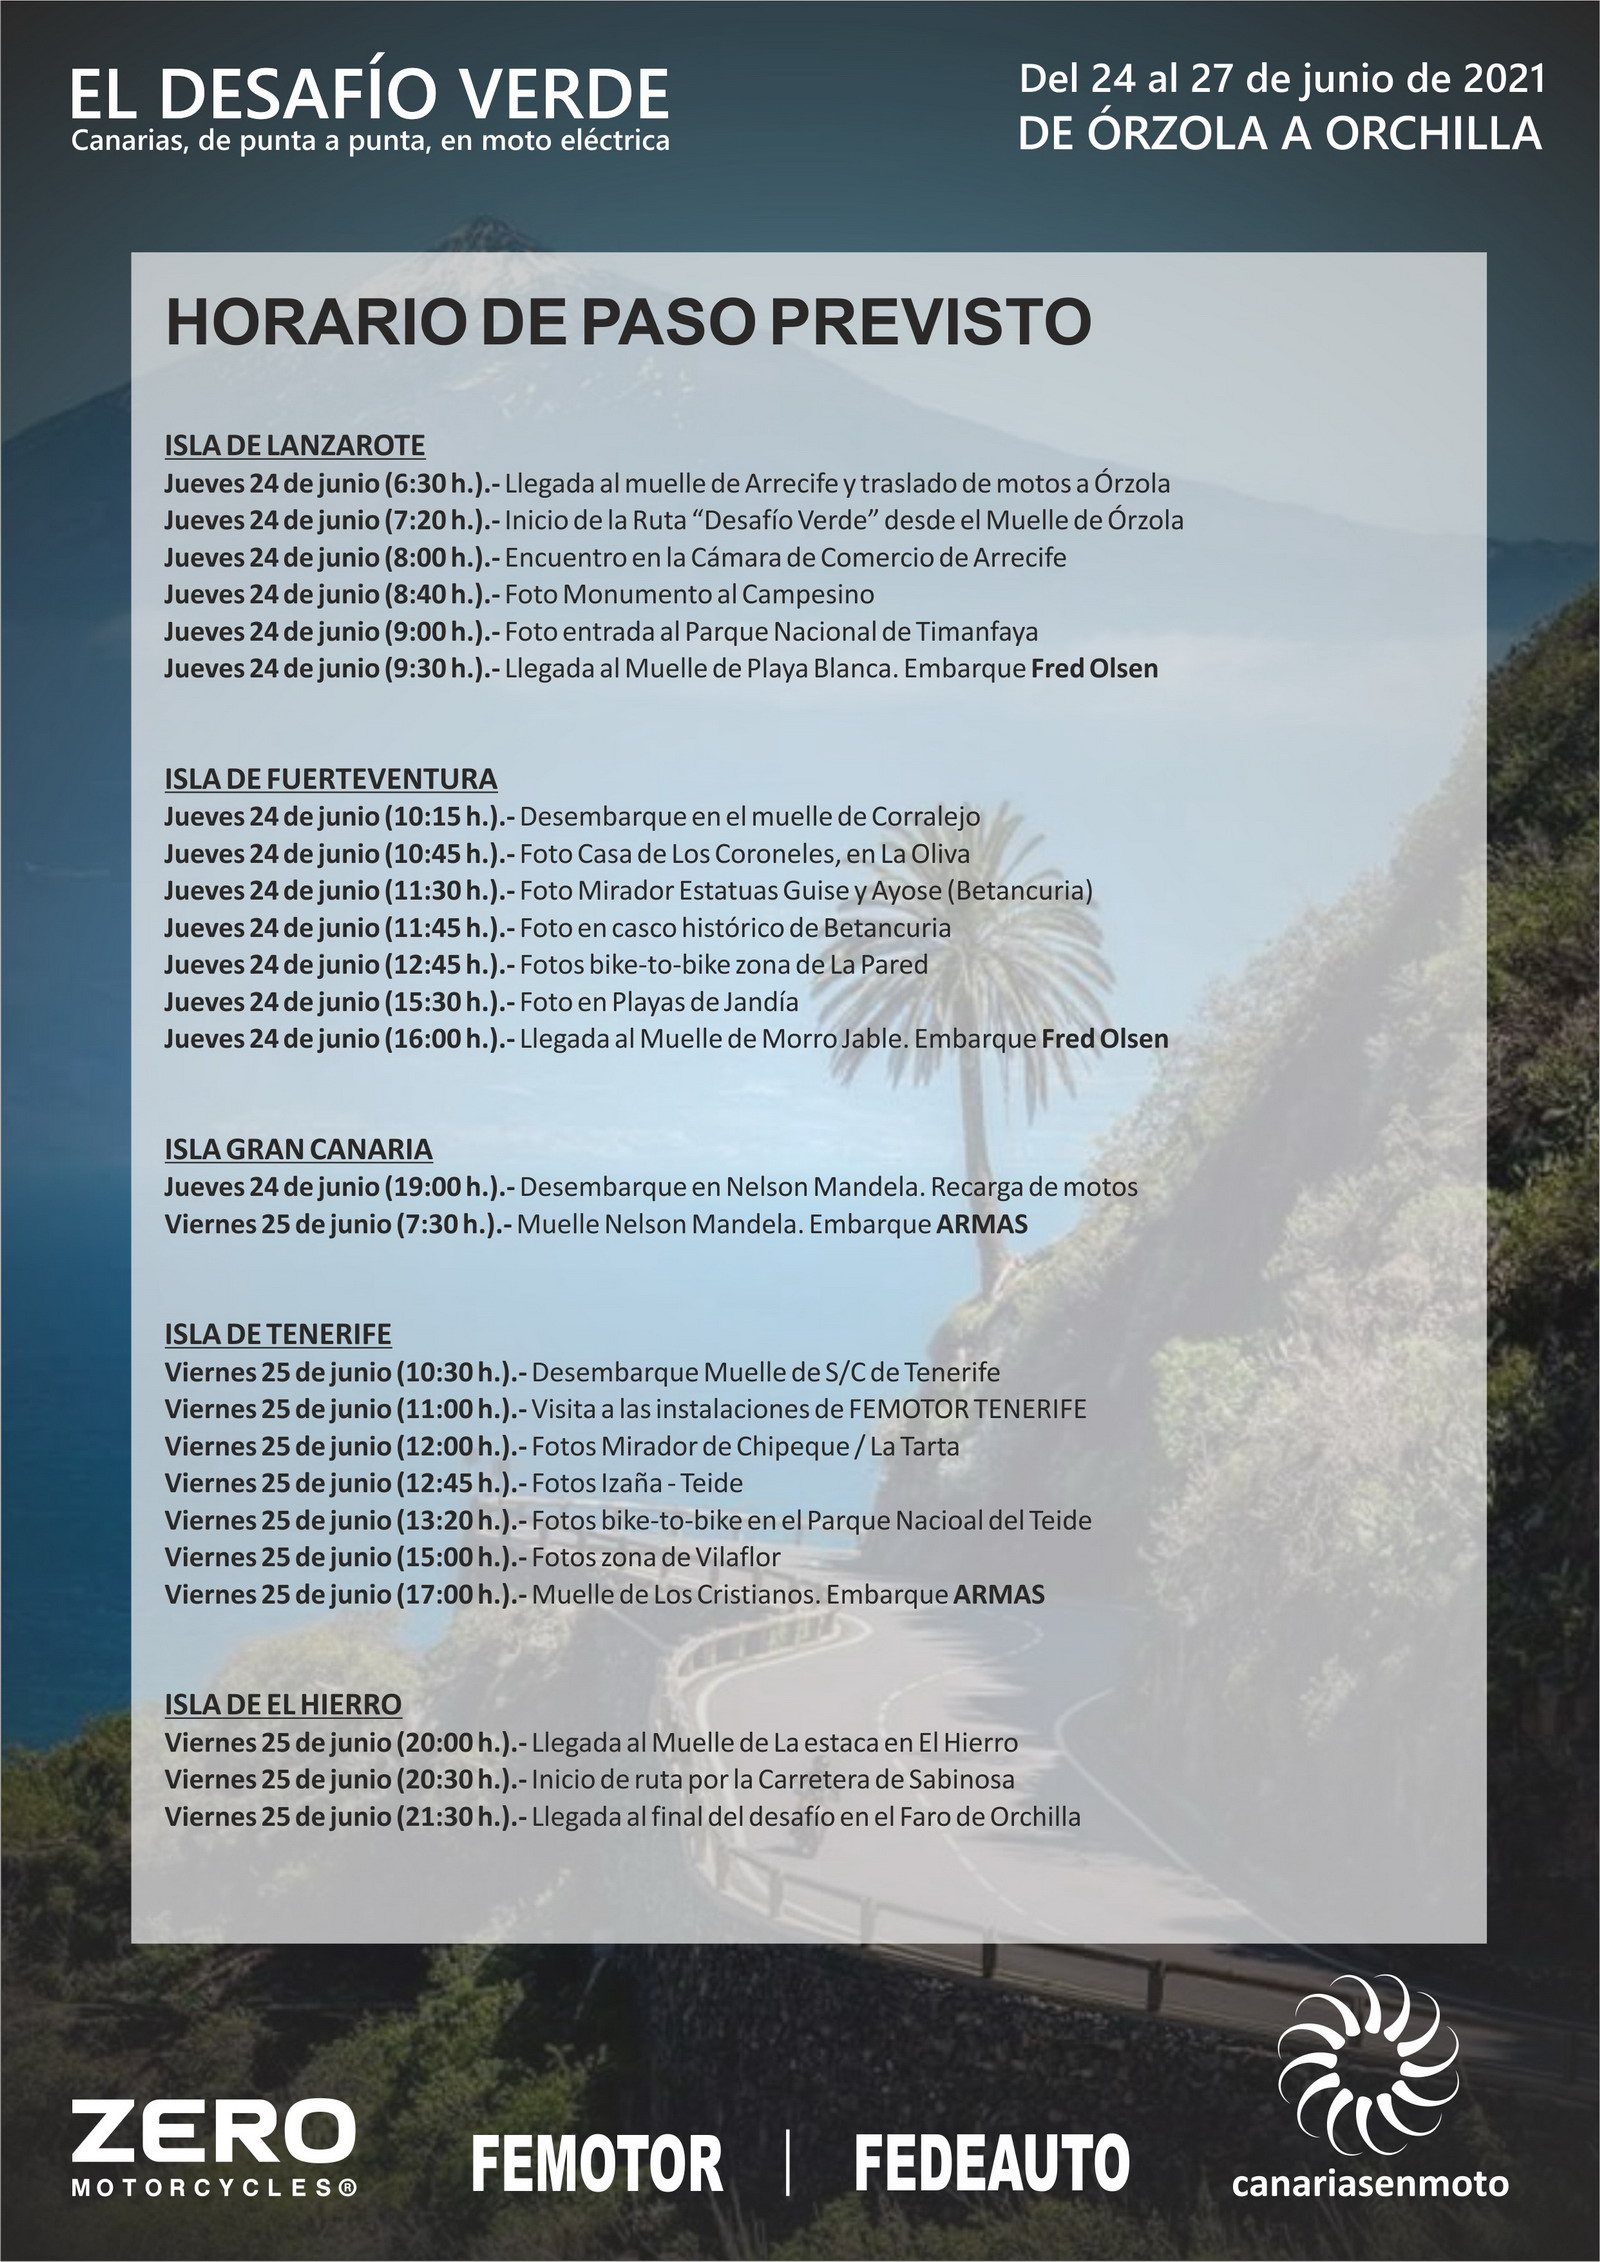 Itinerario "Desafío Verde" Canarias 2021